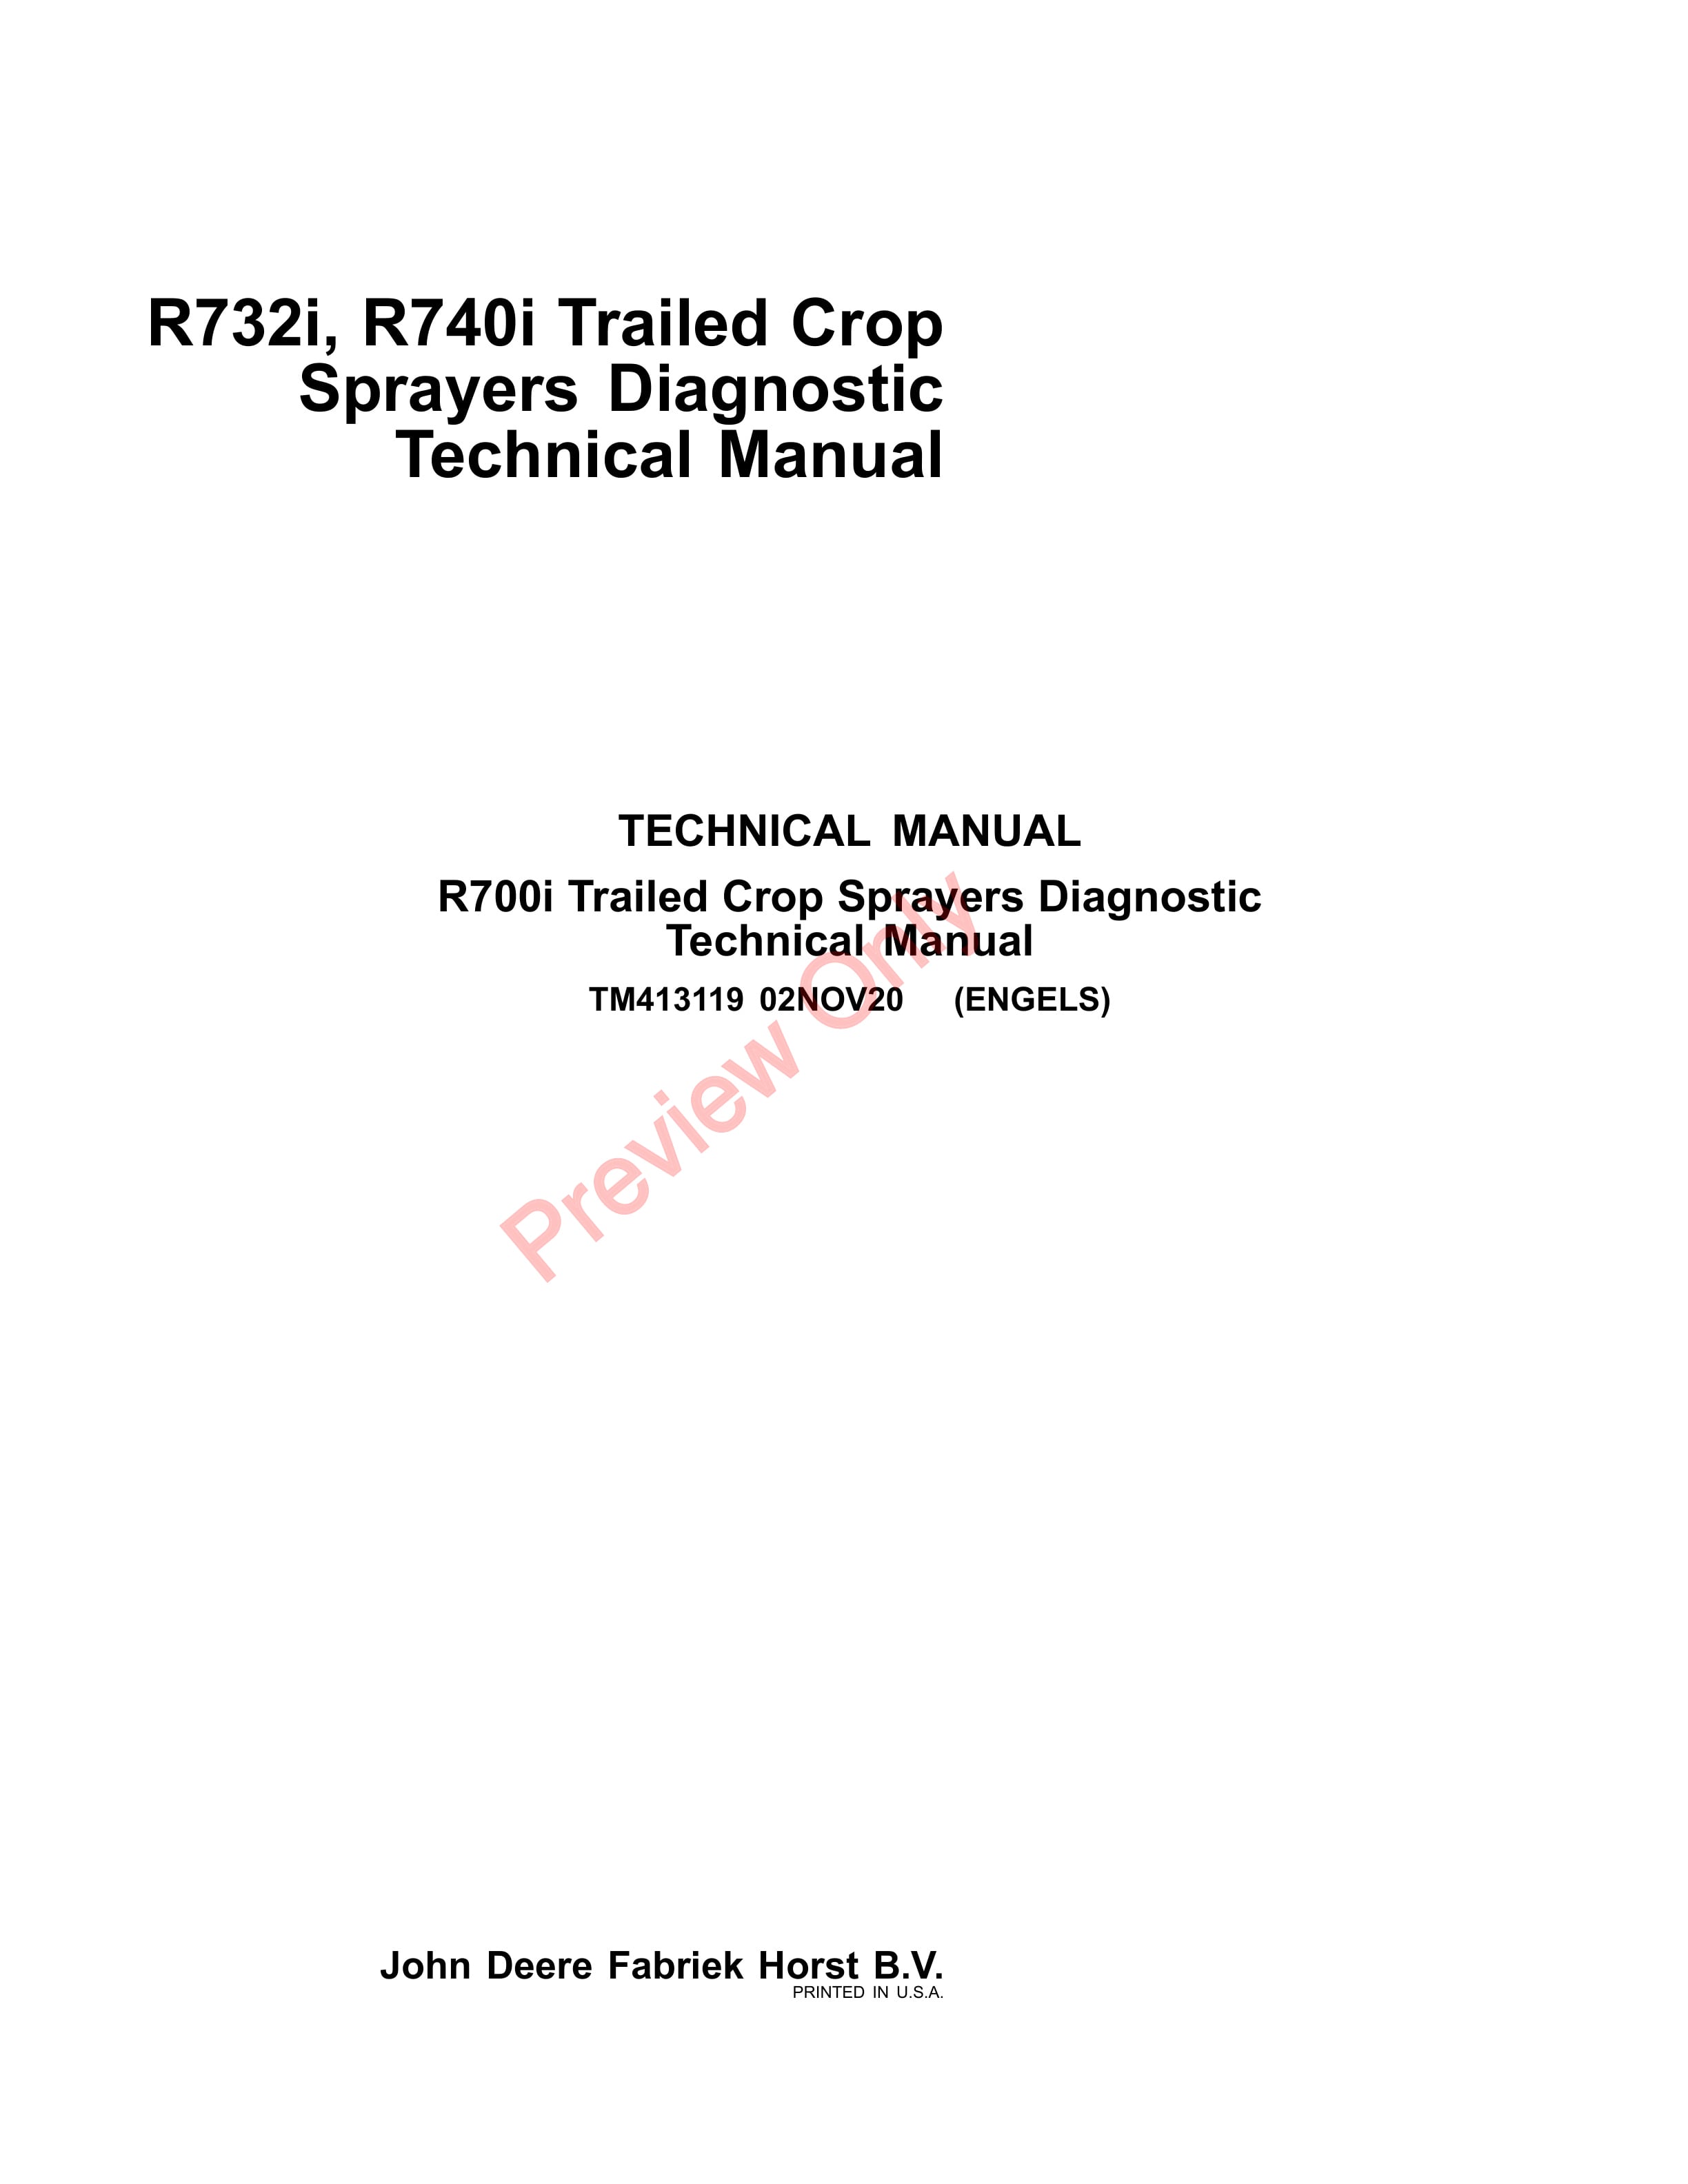 John Deere R732i and R740i Trailed Crop Sprayers Technical Manual TM413119 02NOV20 1